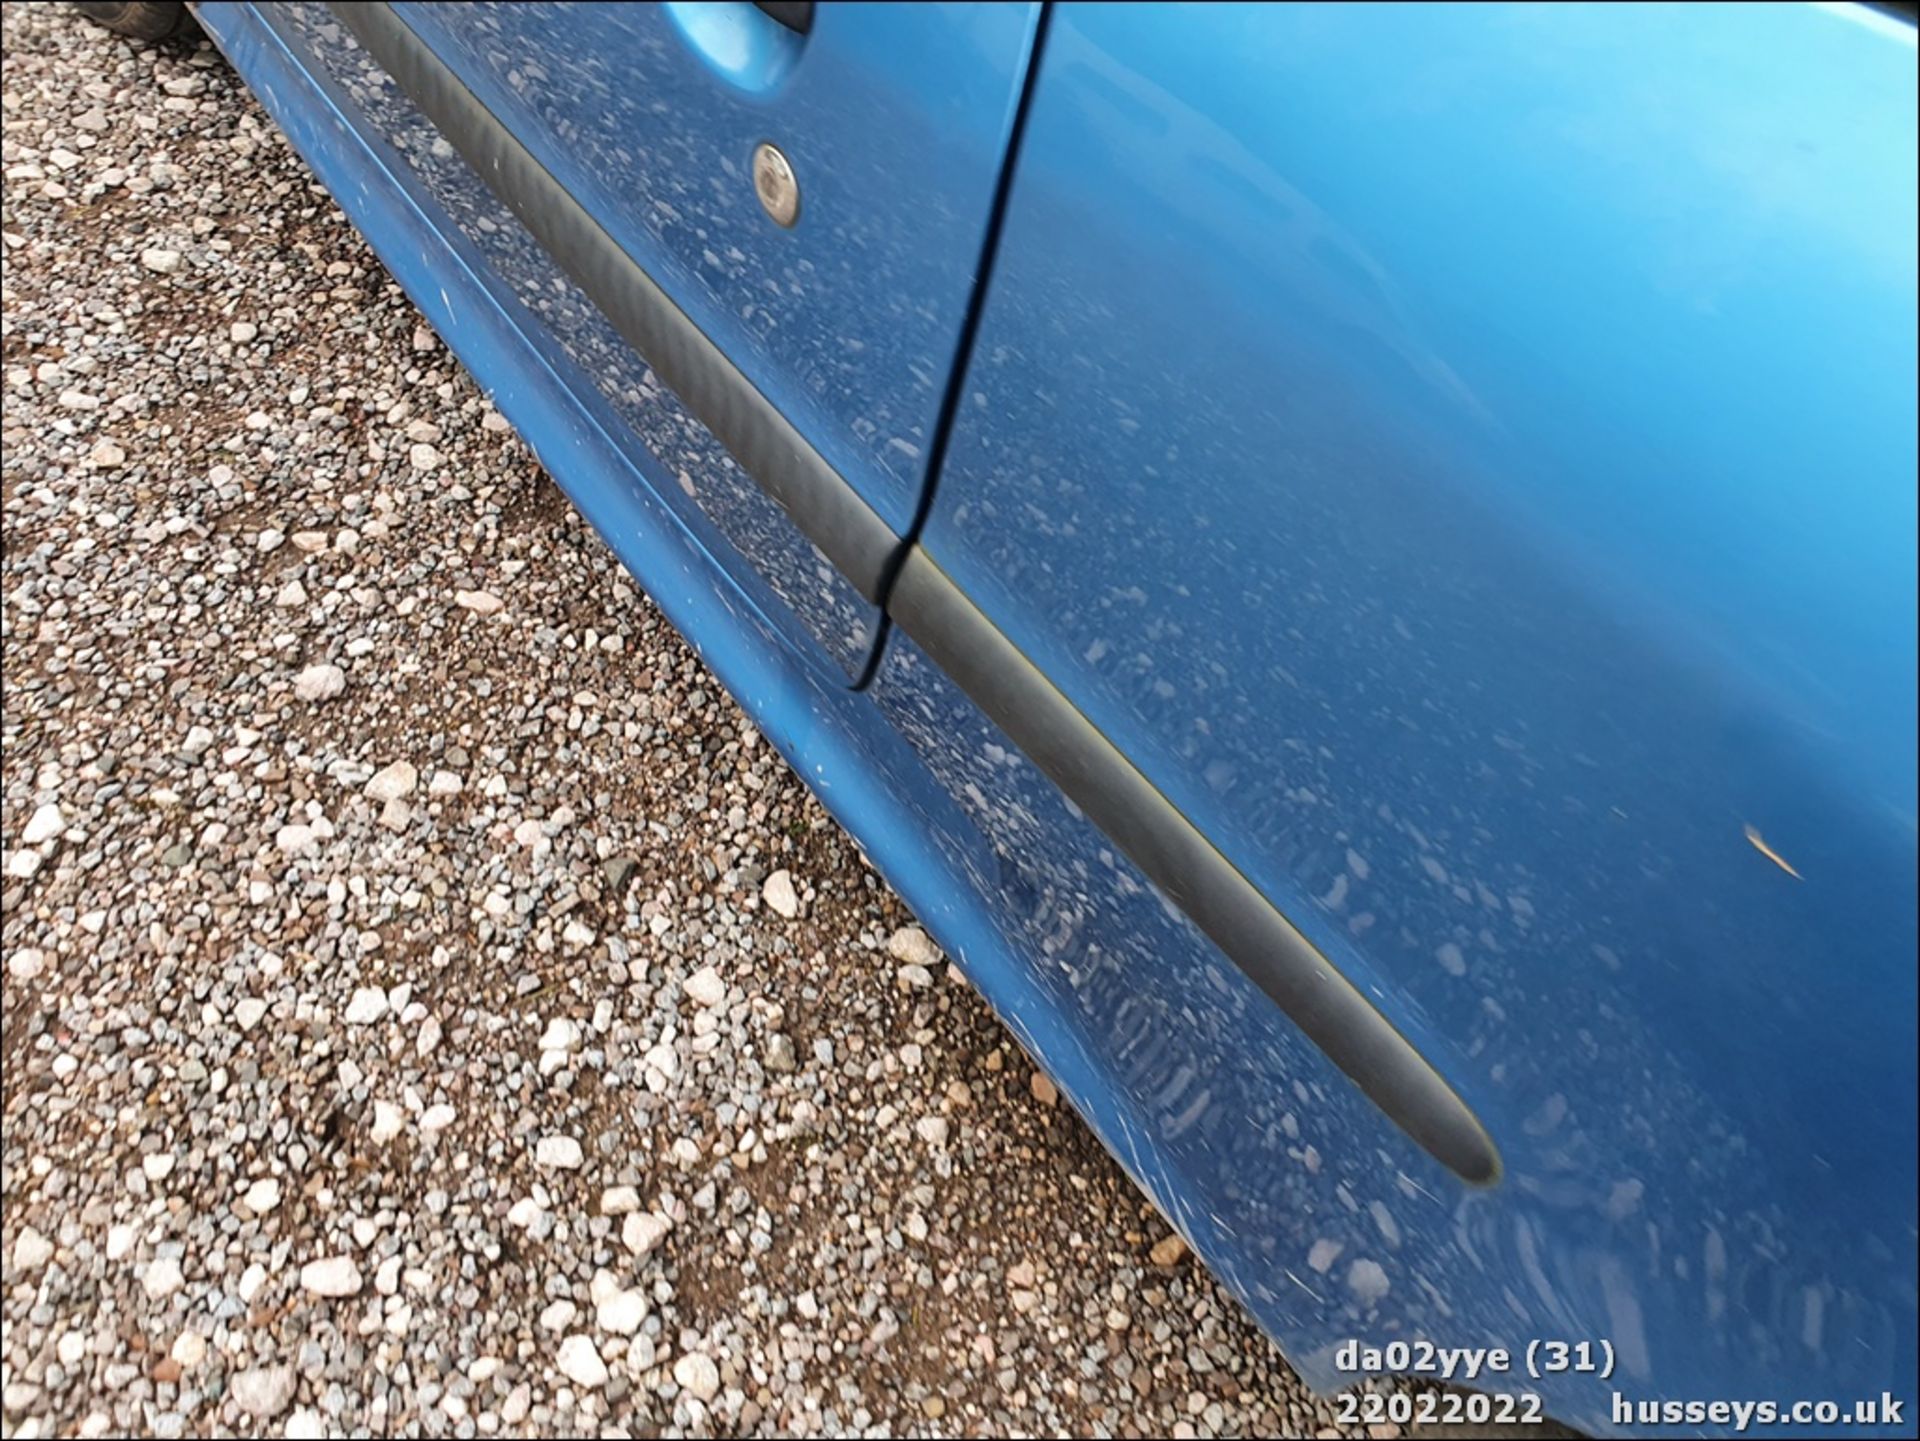 02/02 PEUGEOT 206 STYLE HDI - 1398cc 3dr Hatchback (Blue, 103k) - Image 56 of 63